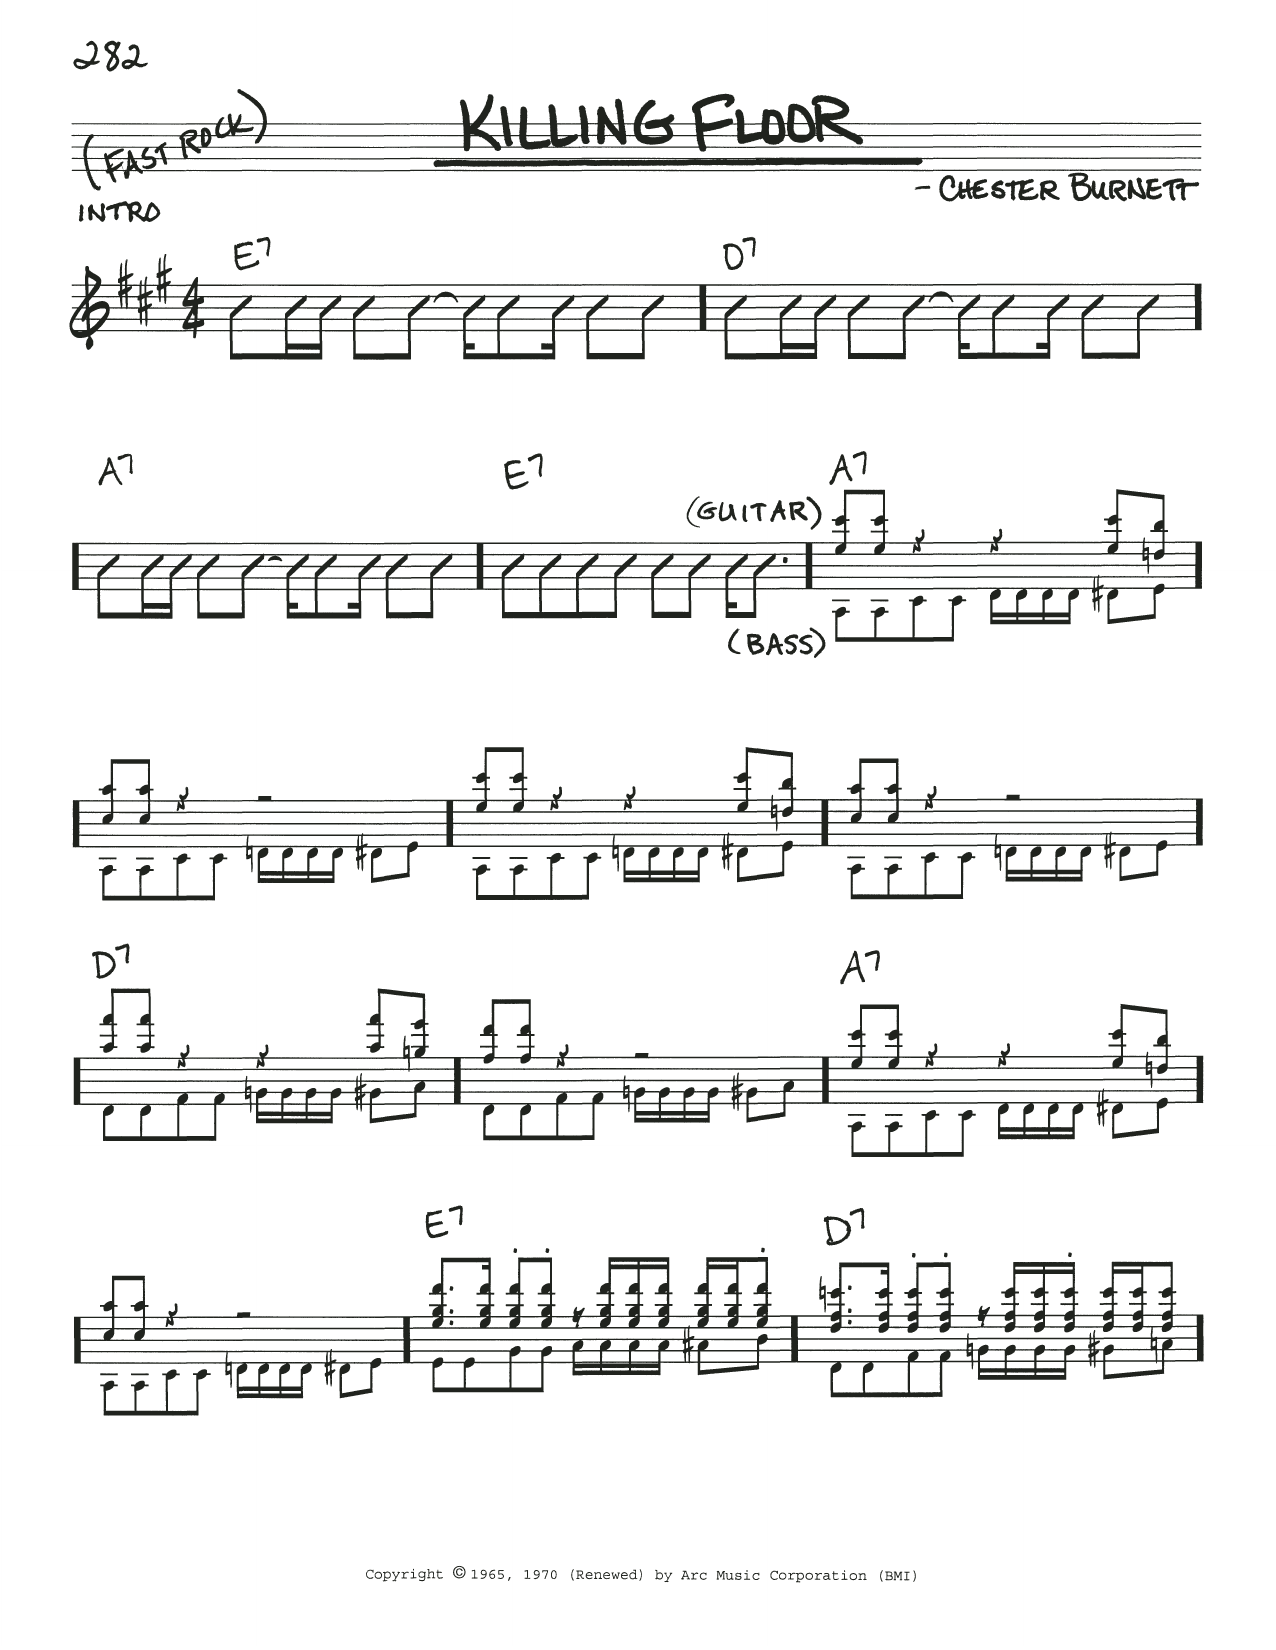 Chester Burnett Killing Floor Sheet Music Notes & Chords for Real Book – Melody, Lyrics & Chords - Download or Print PDF